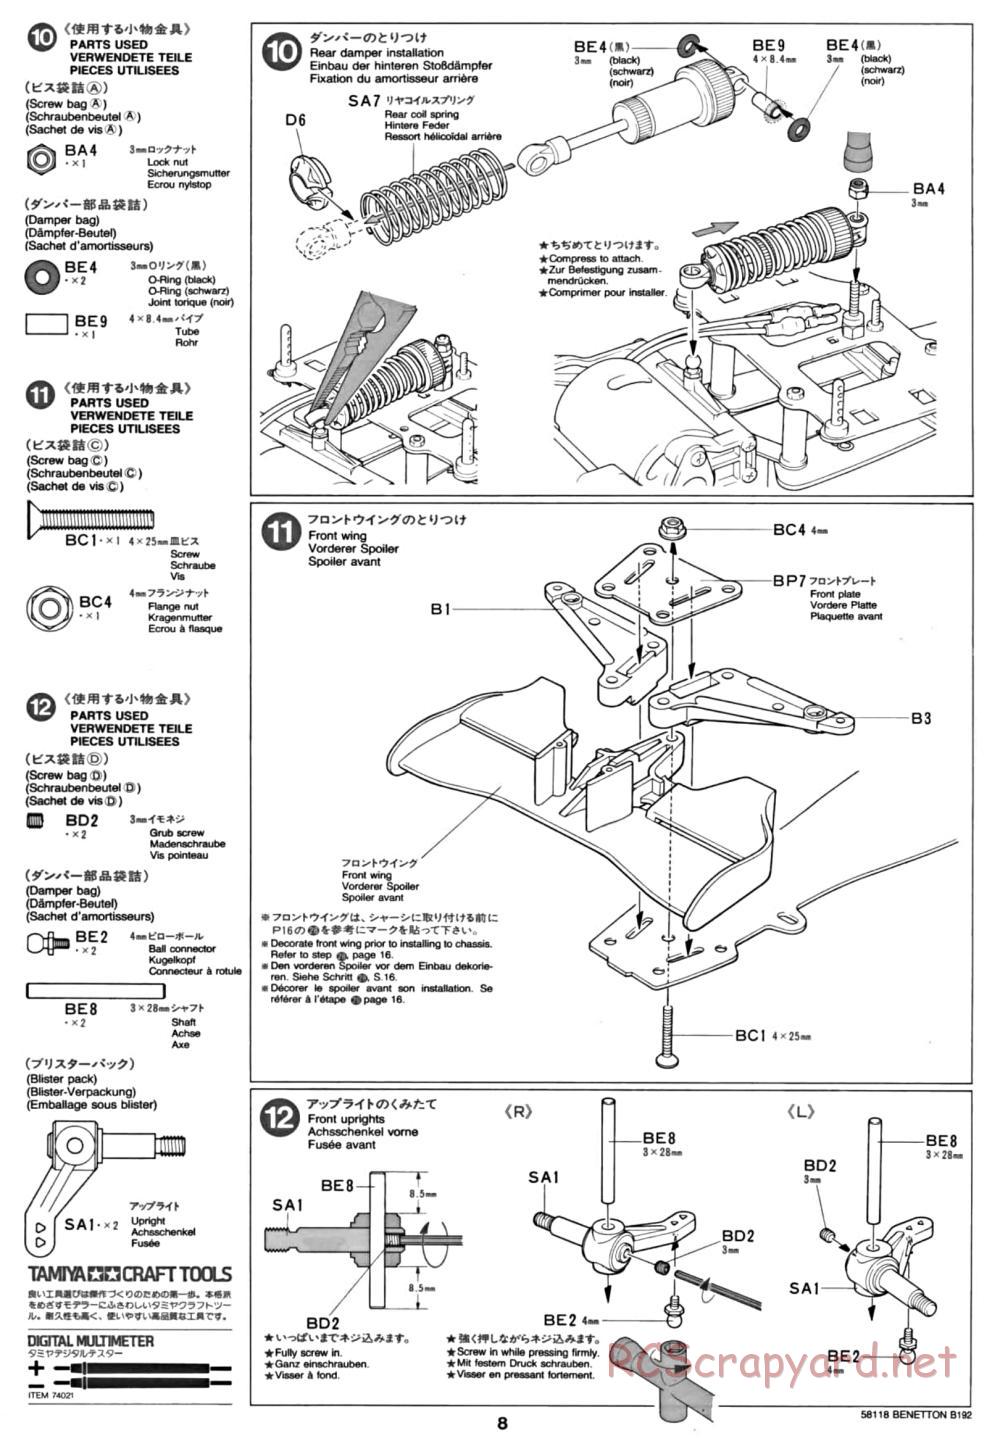 Tamiya - Benetton B192 - F102 Chassis - Manual - Page 8